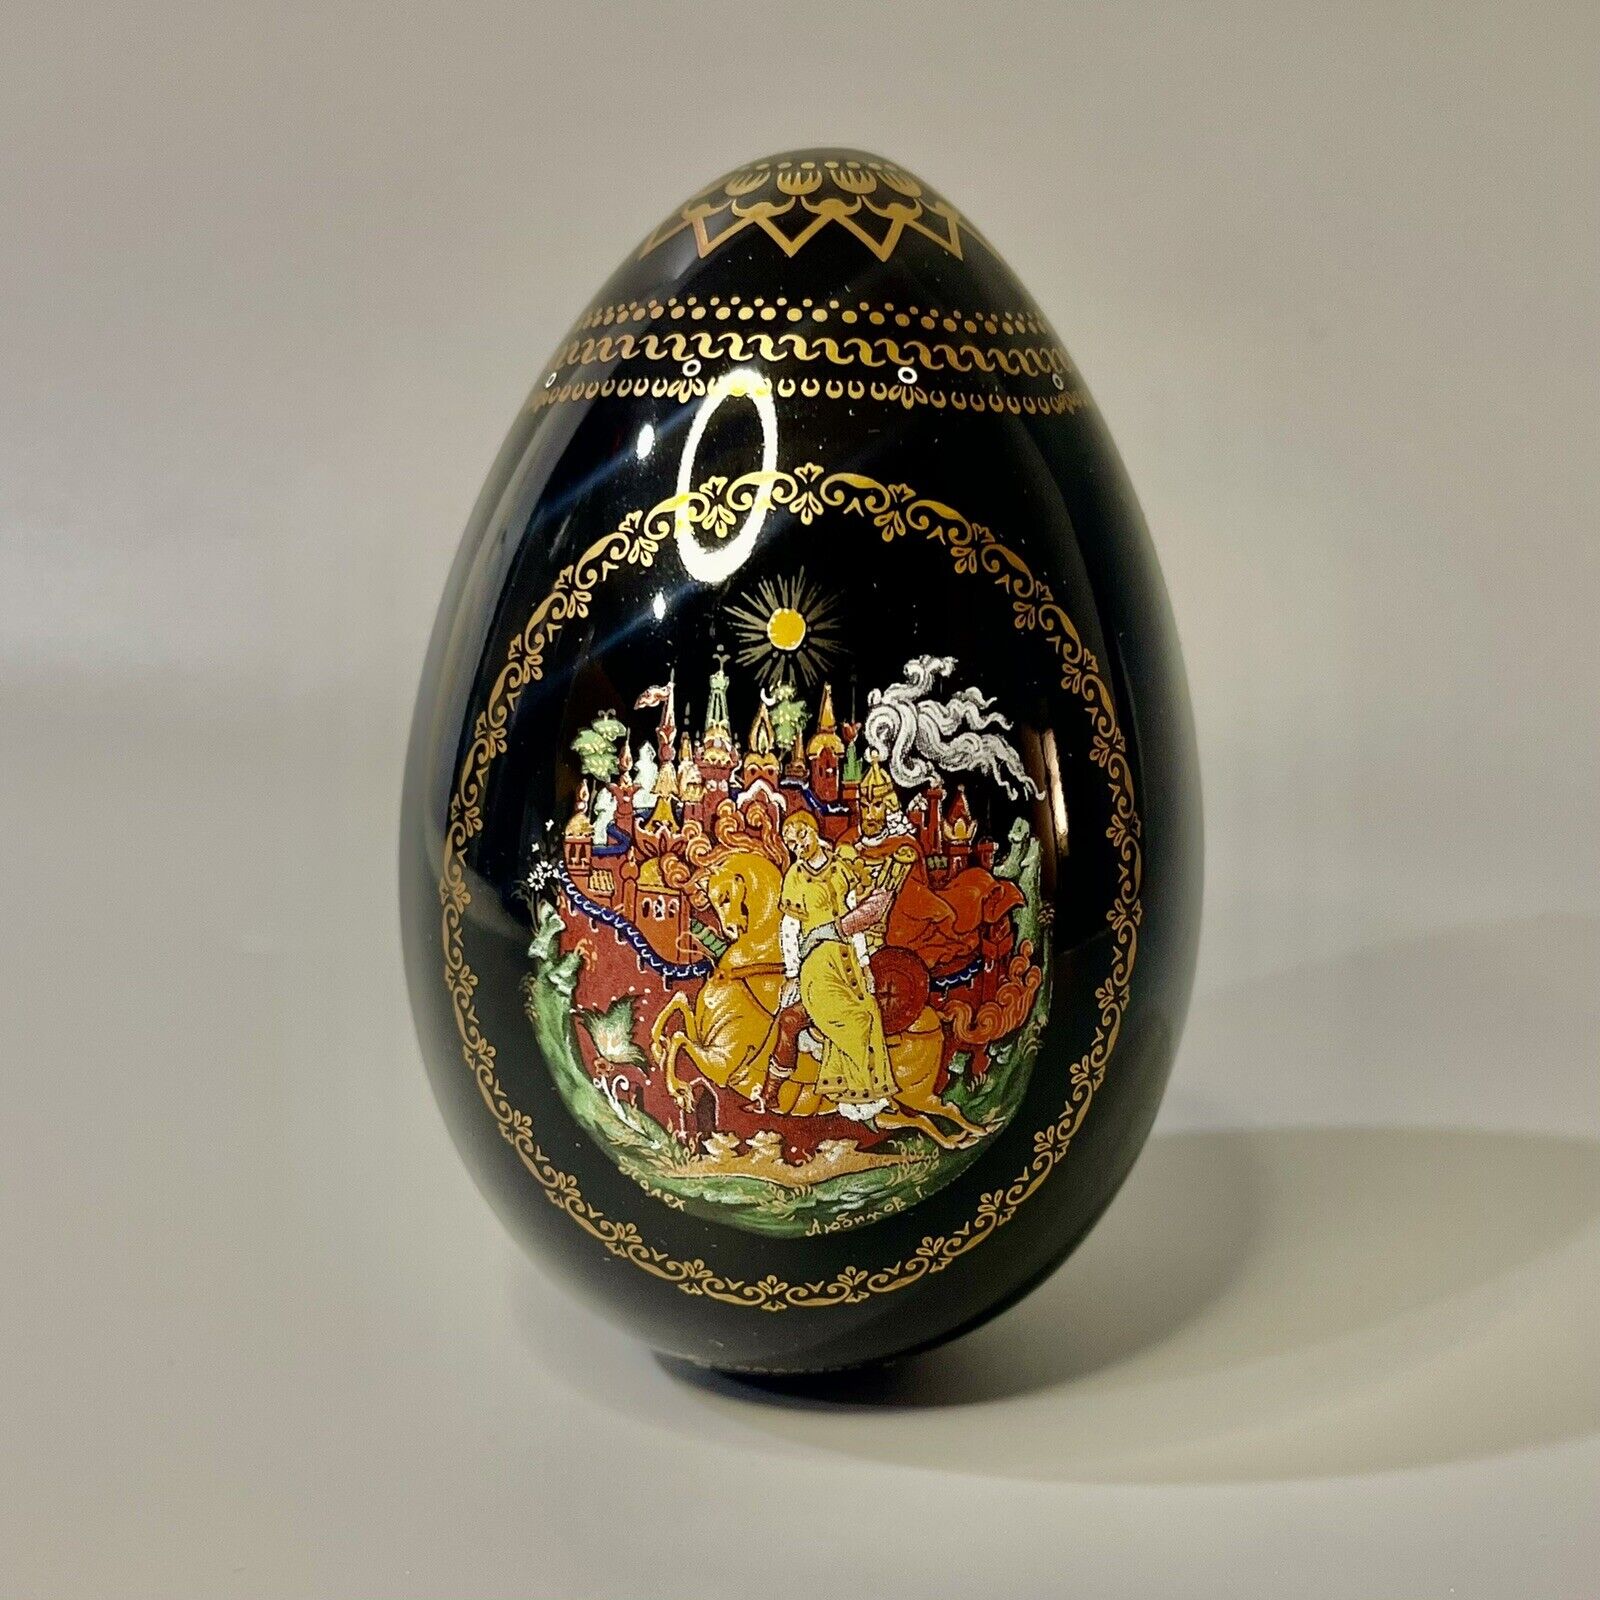 Vintage Russian ( Ukrainian) Fairytale Egg “Ruslan And Ludmila” 24-karat-gold